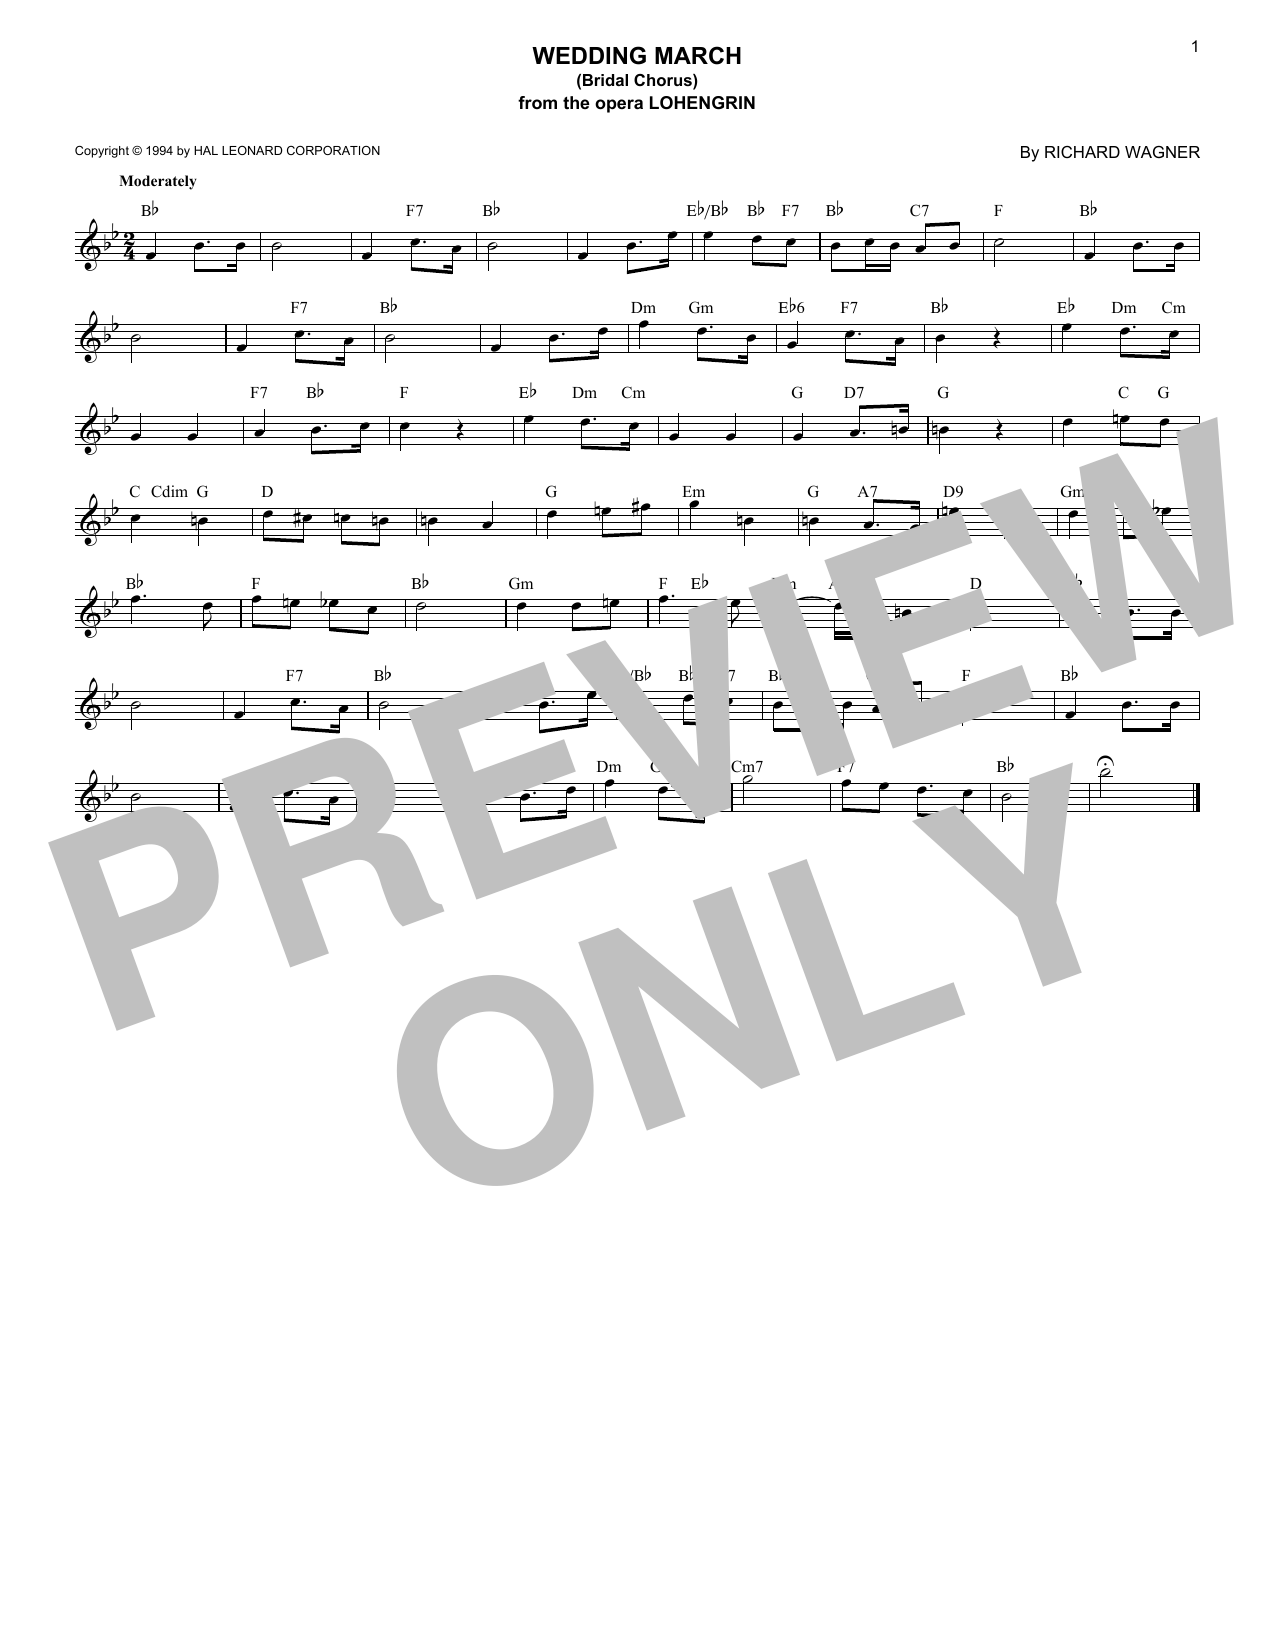 Richard Wagner Wedding March (Bridal Chorus) Sheet Music Notes & Chords for Melody Line, Lyrics & Chords - Download or Print PDF